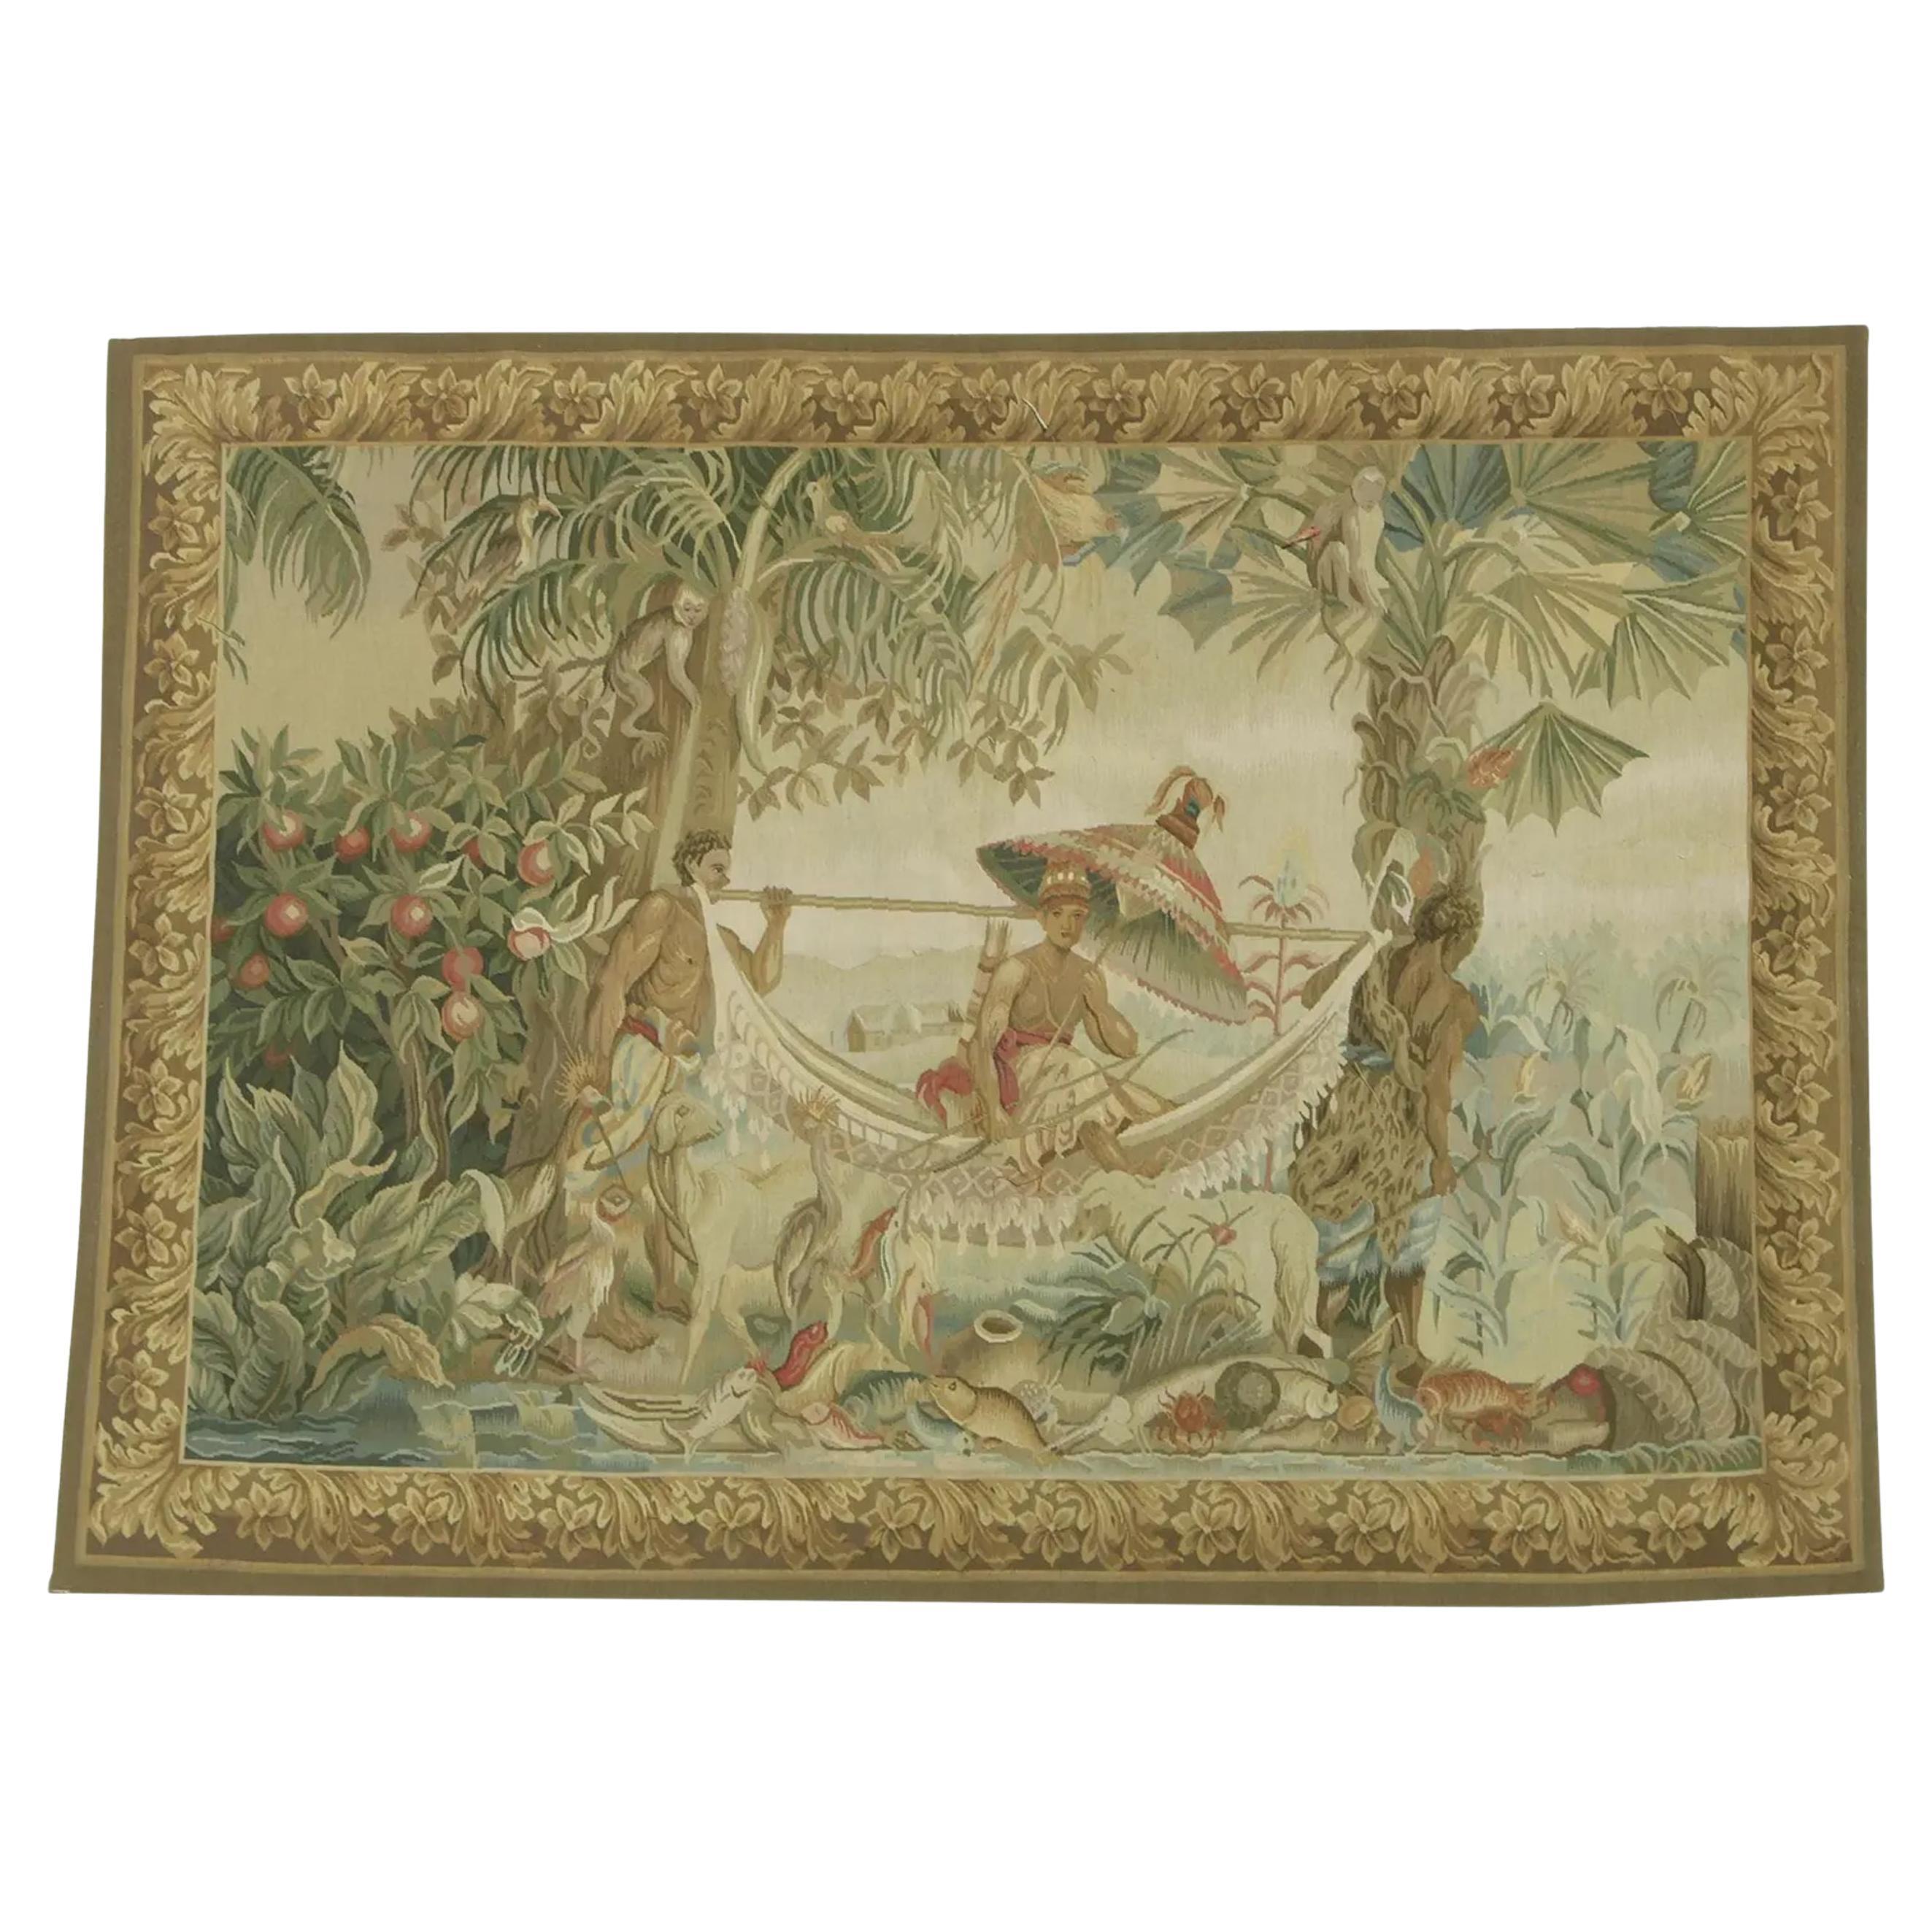 Vintage Tapestry Depicting Royalty 5.7X4